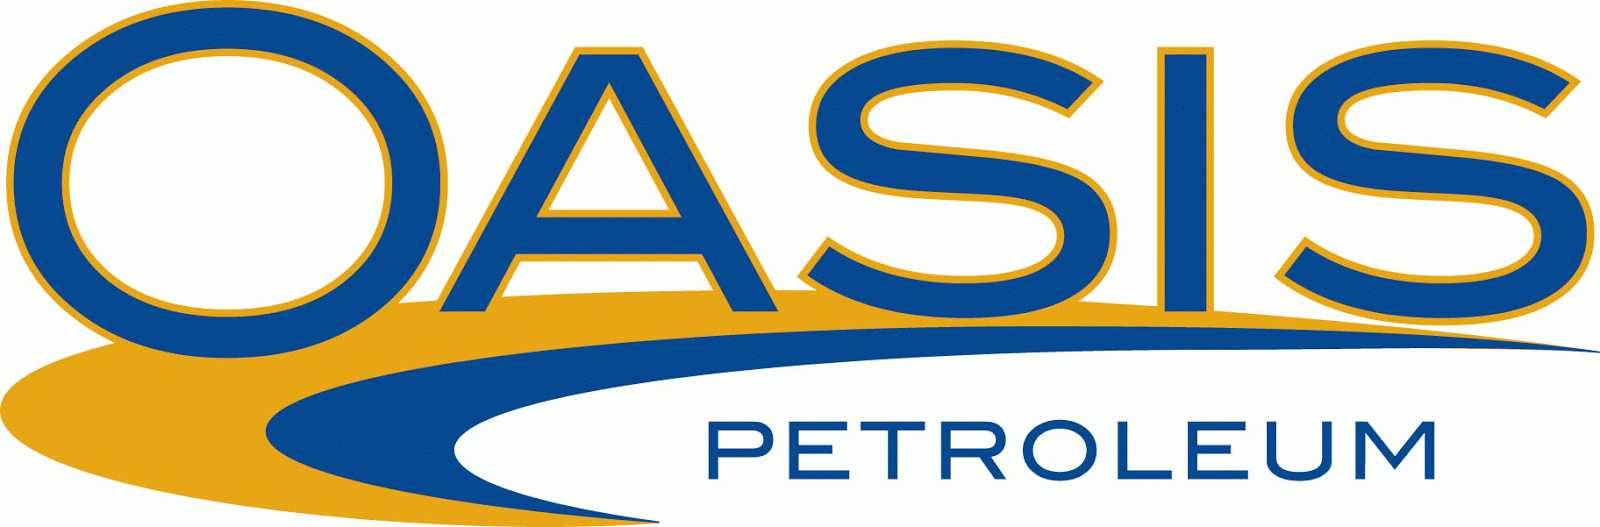 Oasis Petroleum Inc.